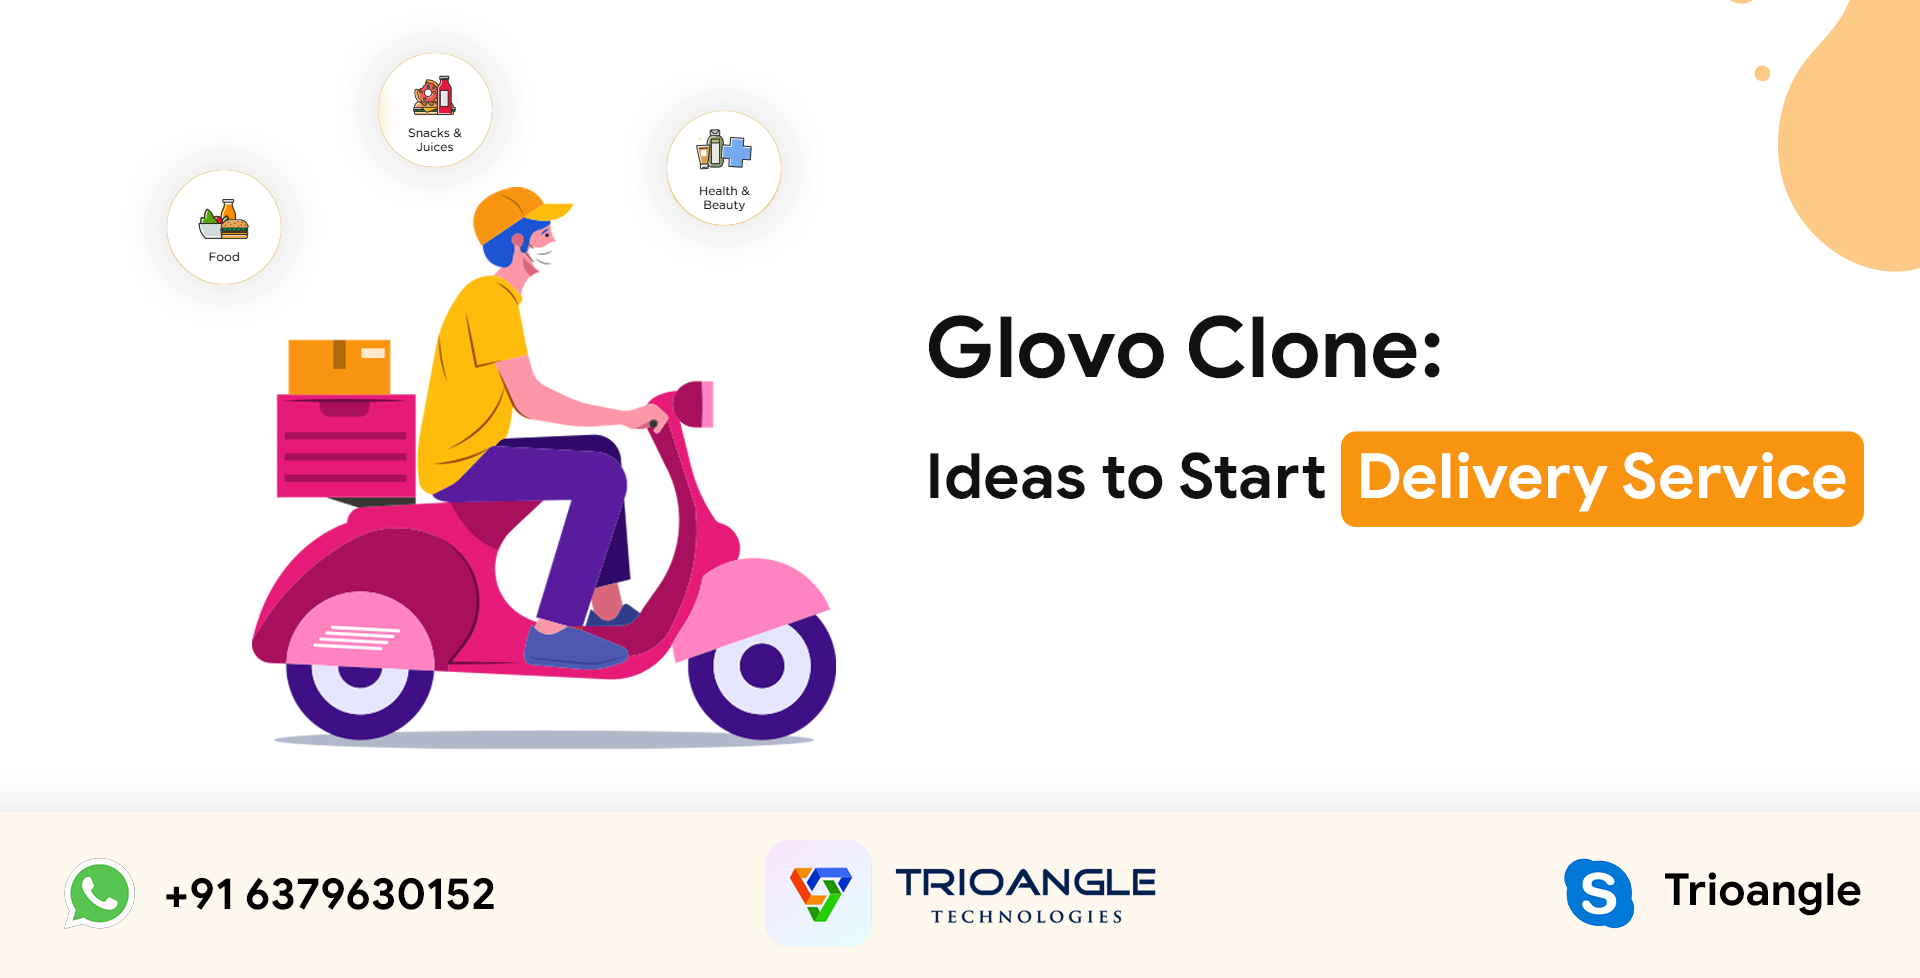 Glovo Clone: Ideas to Start Delivery Service